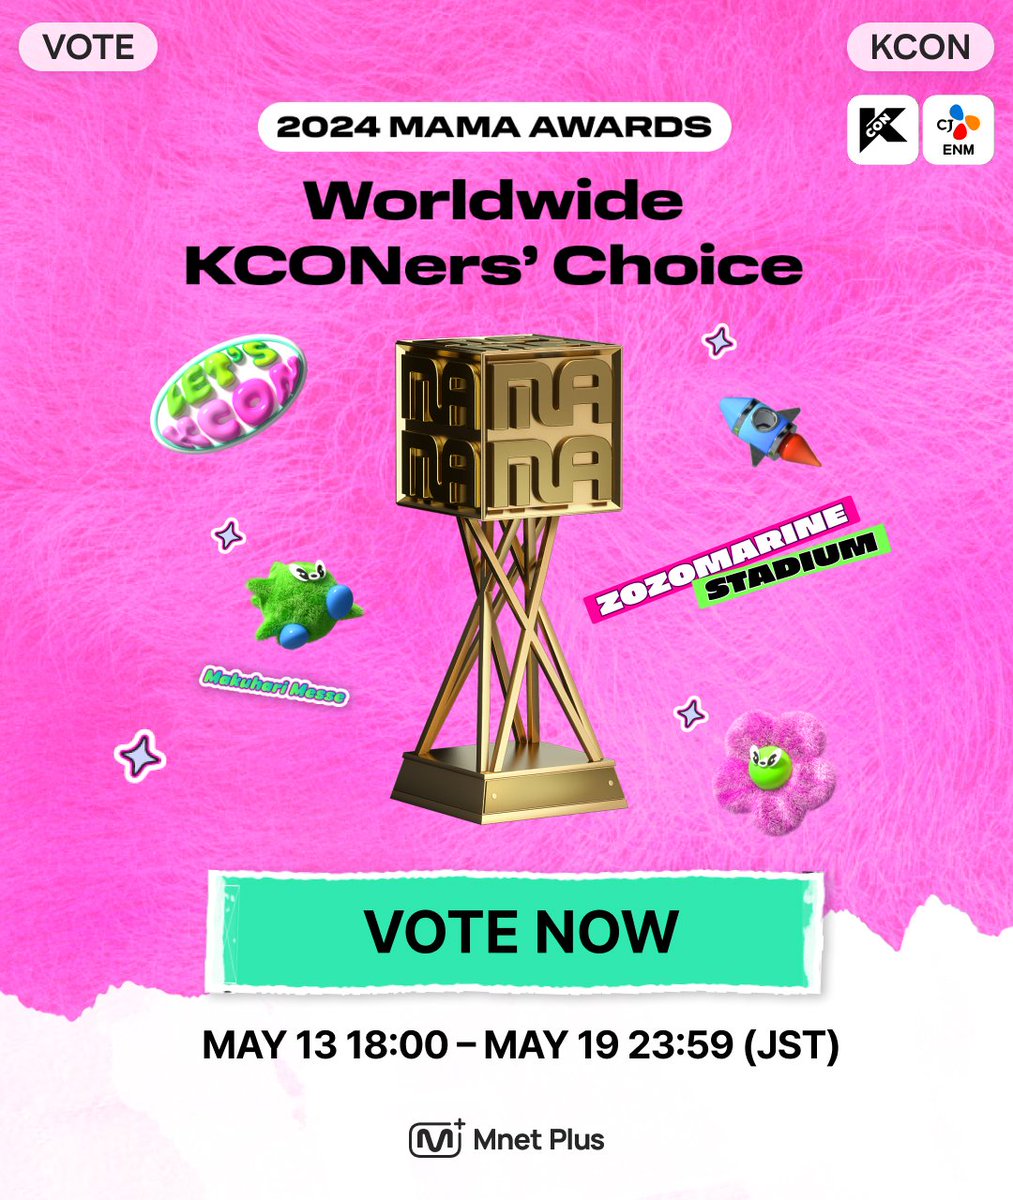 [#KCONJAPAN2024] 2024 MAMA AWARDS <Worldwide KCONers' Choice> 投票実施中 📆投票期間：5月10日 18:00 - 5月19日 23:59 (KST) 👉mnetplus.onelink.me/TRa8/xhlvt49y ✓ KCON 2024 JAPANで投票権を獲得した方のみ投票できます❗ #MnetPlus #엠넷플러스 #KCON #MAMAAWARDS #2024MAMAAWARDS @kconjapan